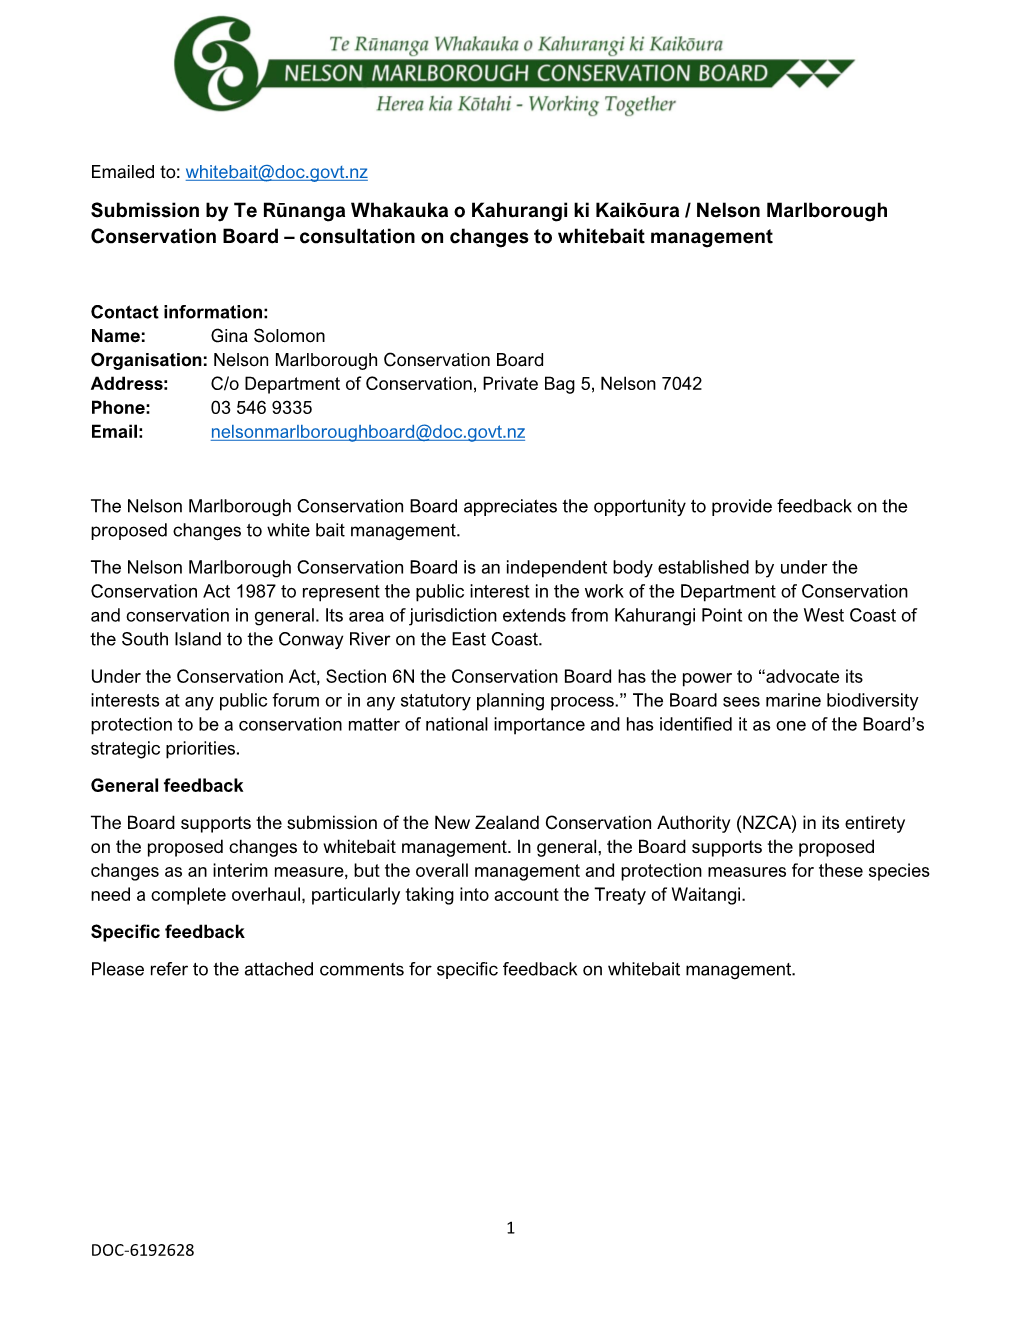 Submission by Te Rūnanga Whakauka O Kahurangi Ki Kaikōura / Nelson Marlborough Conservation Board – Consultation on Changes to Whitebait Management